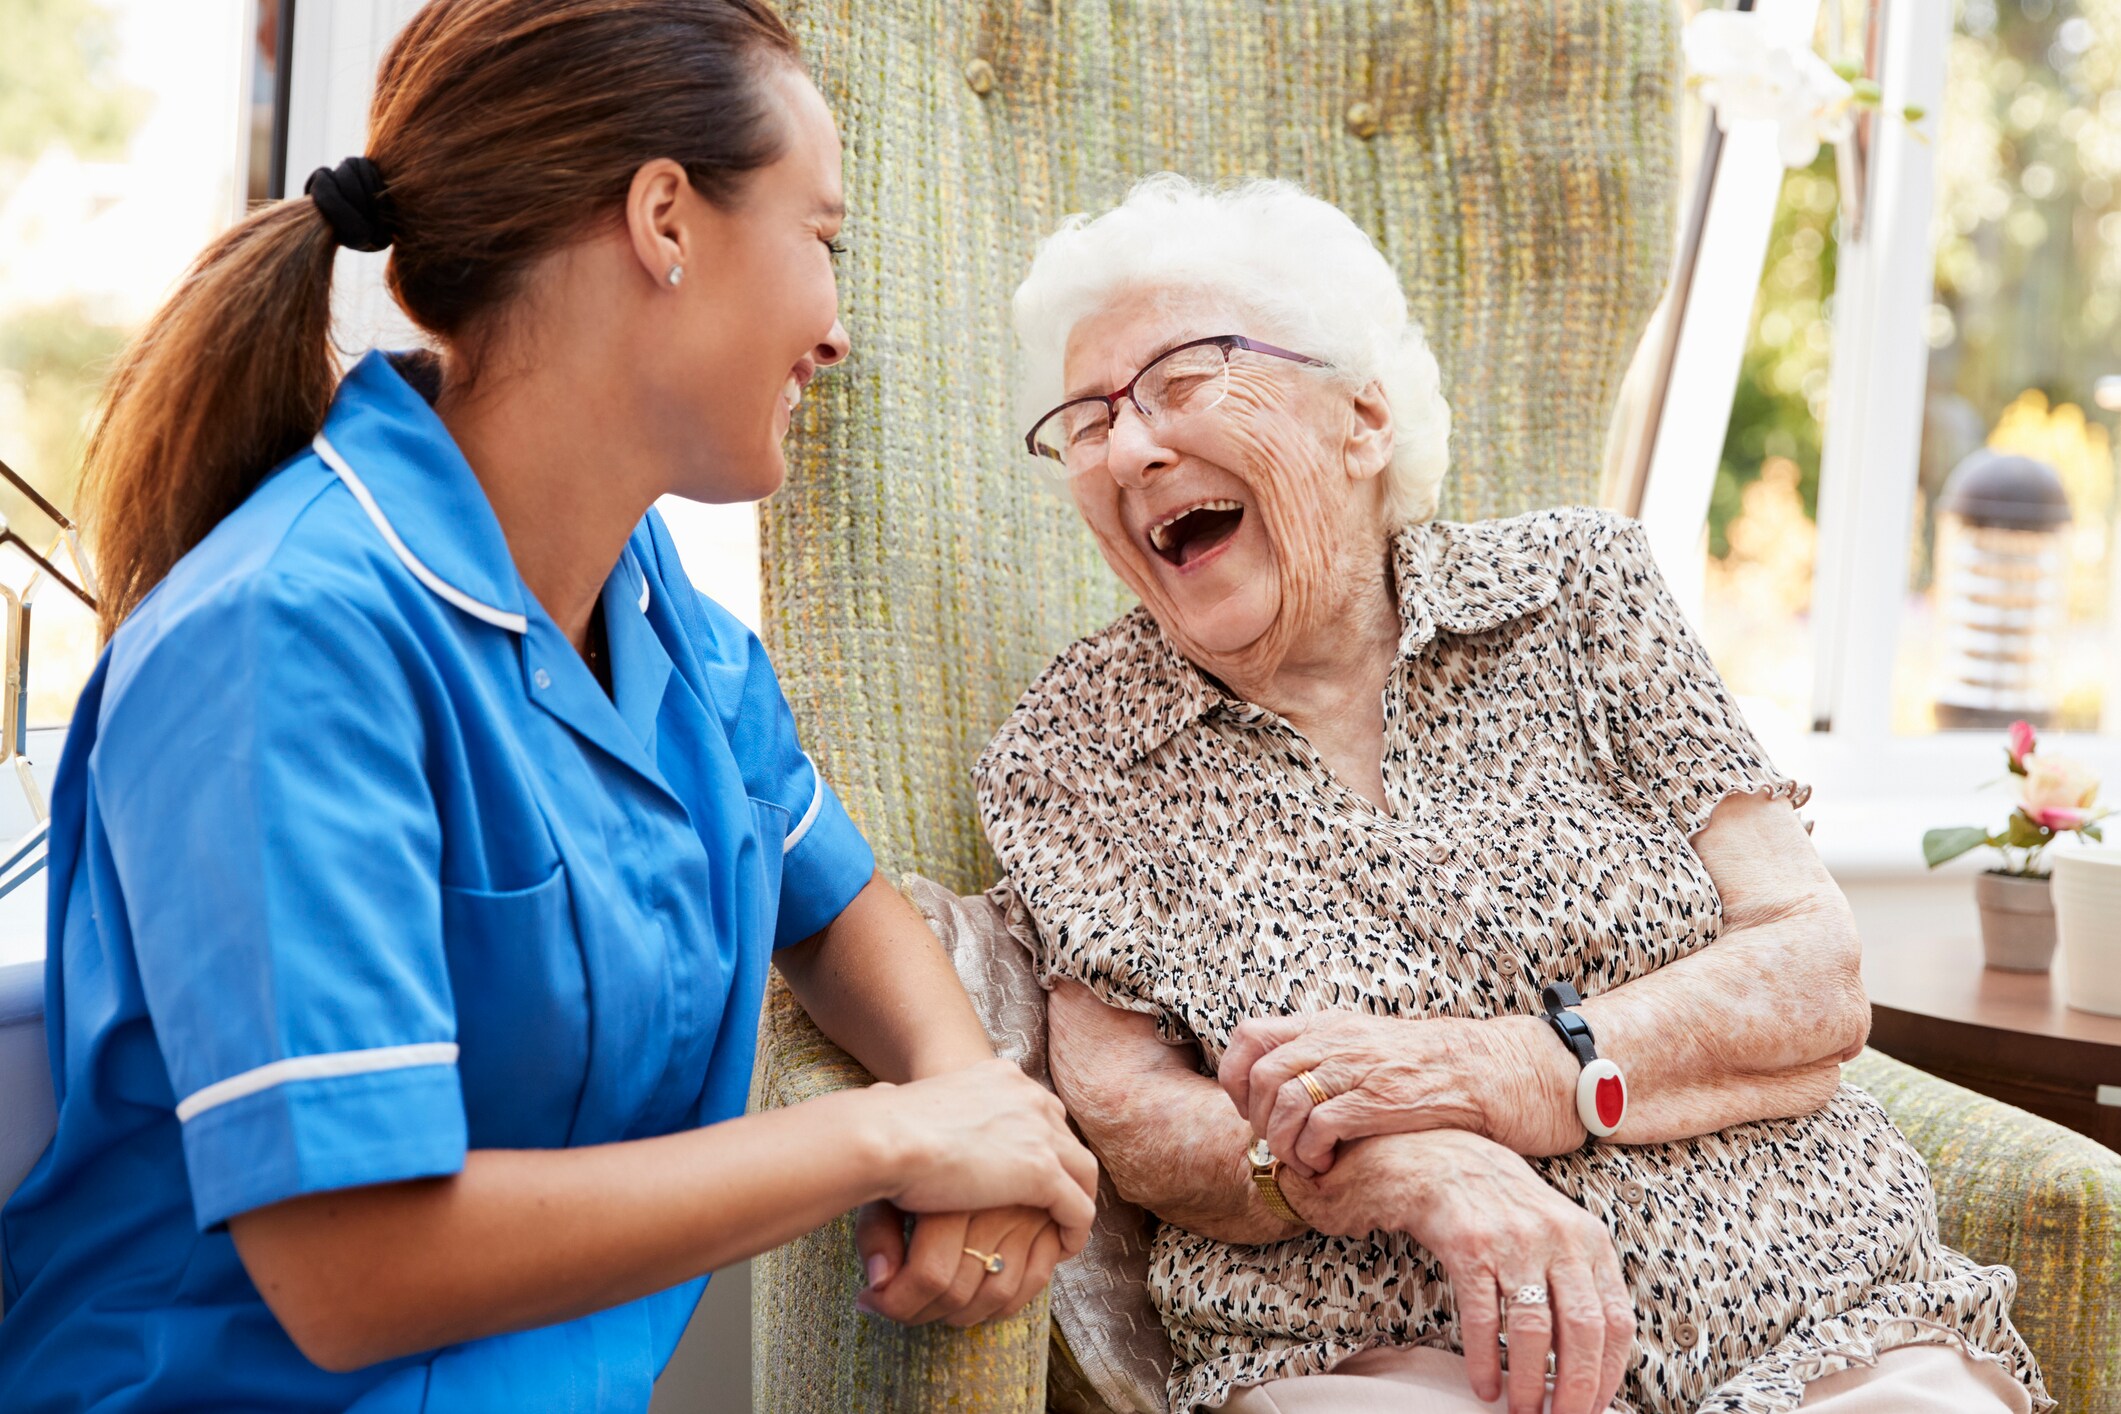 Why every senior caregiver should consider professional training